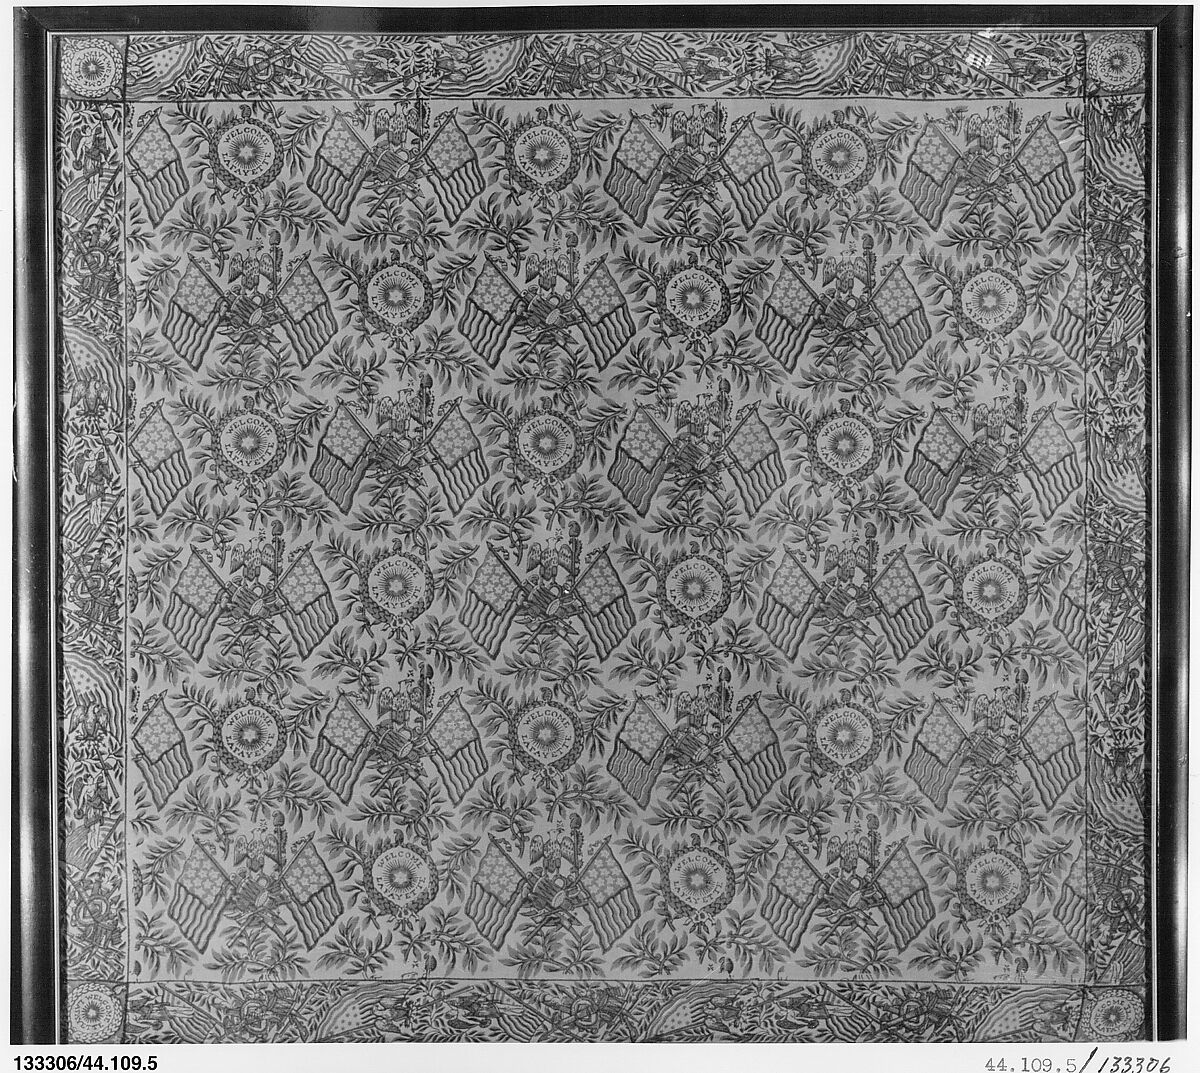 Handkerchief, Cotton, printed, American or British 